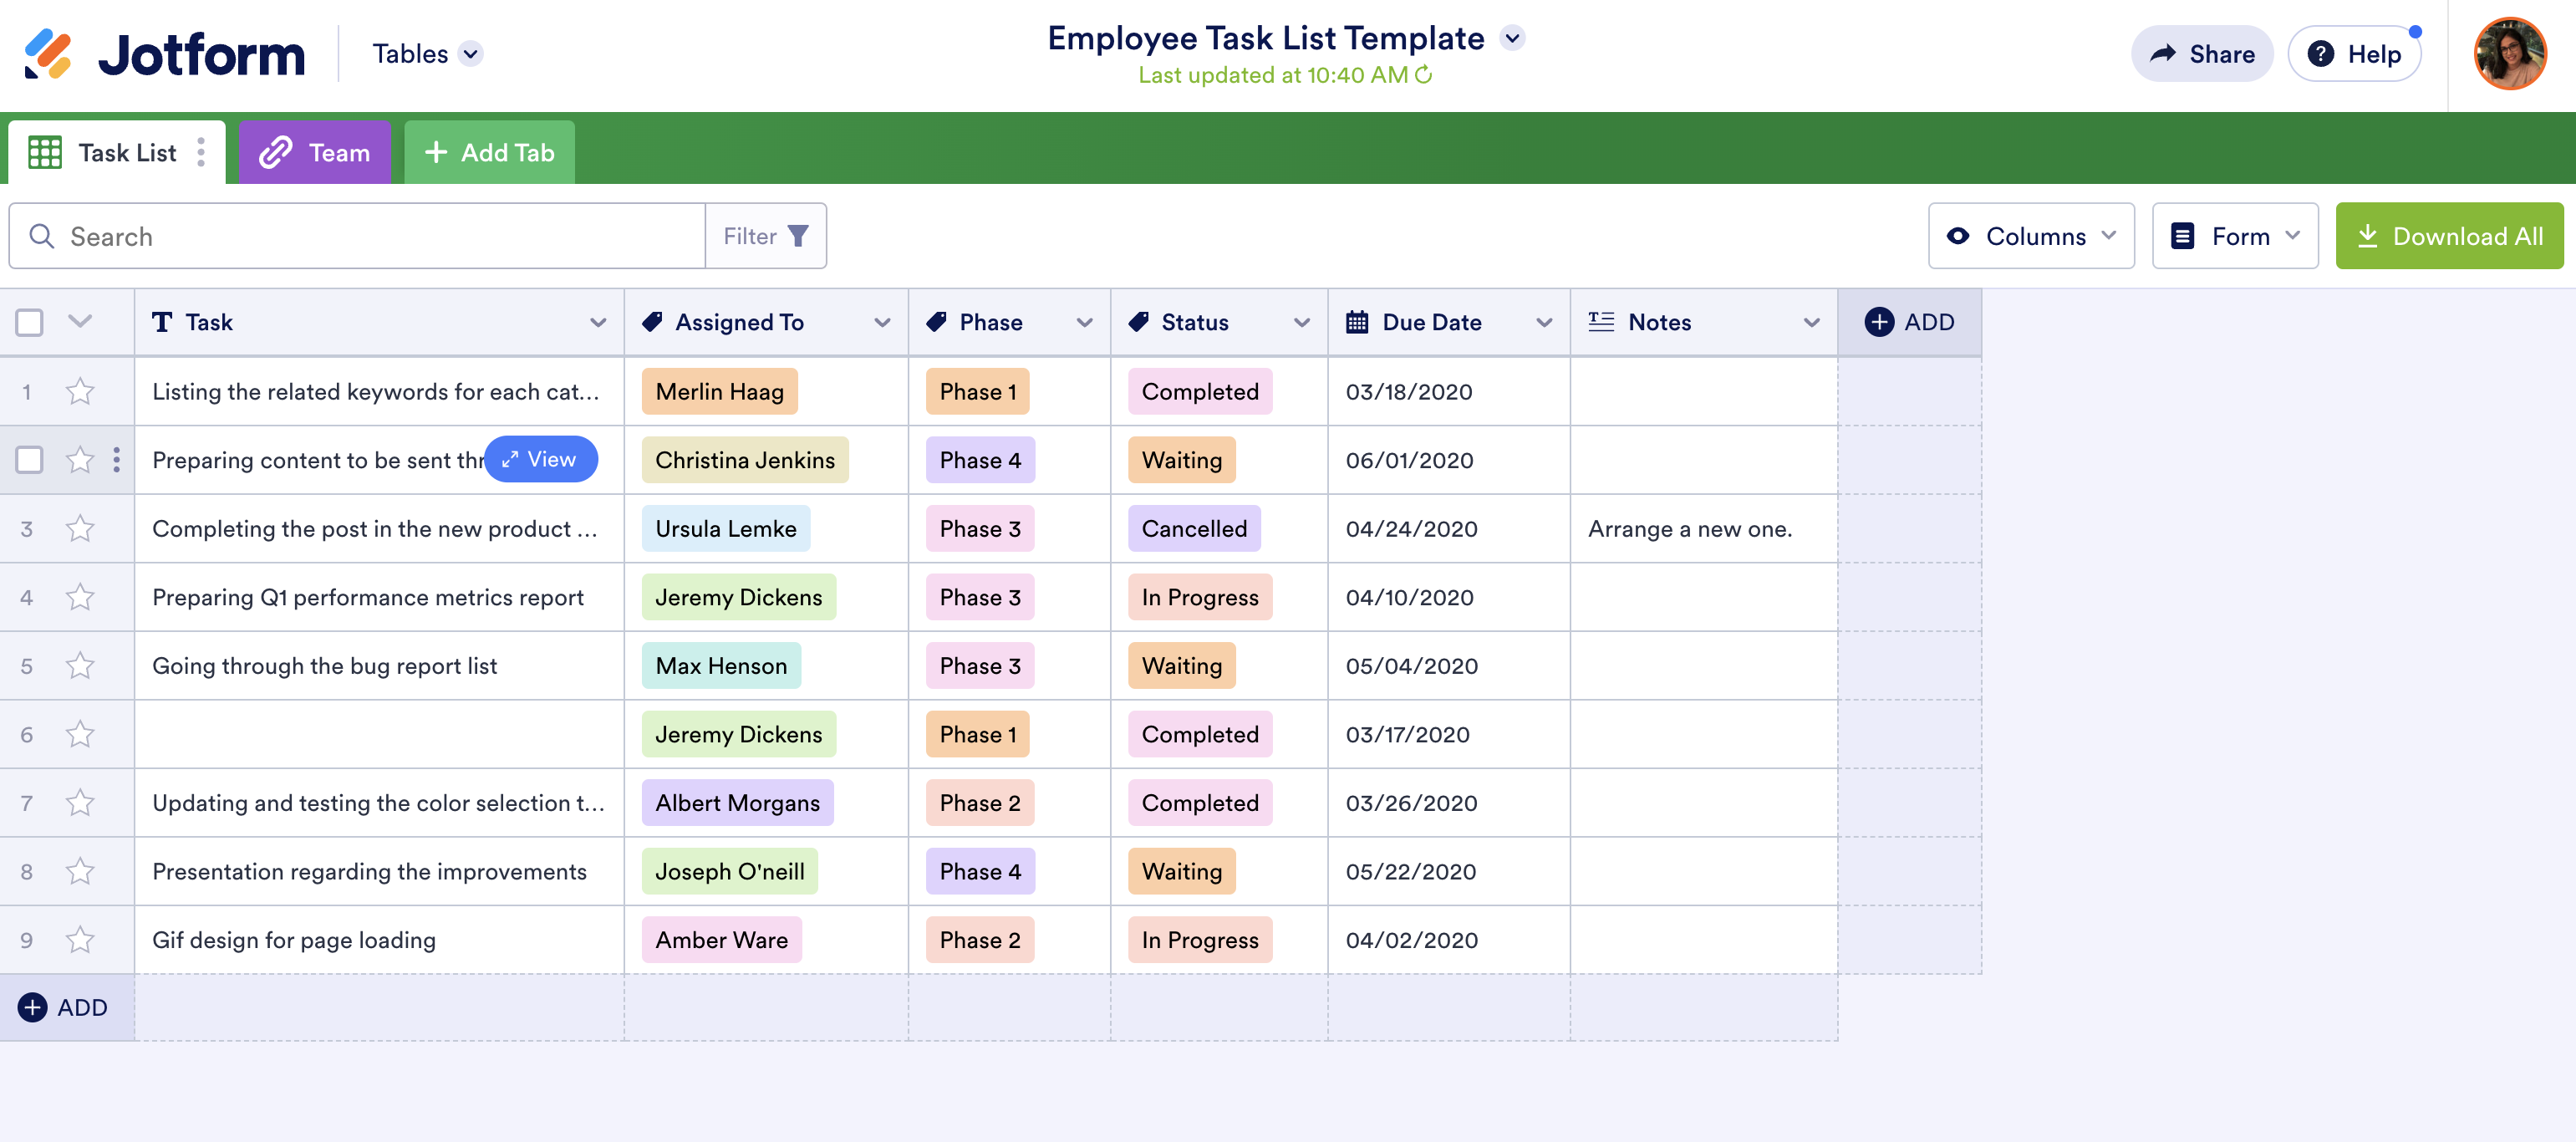 Screenshot of Employee Task List Template in Jotform Tables 